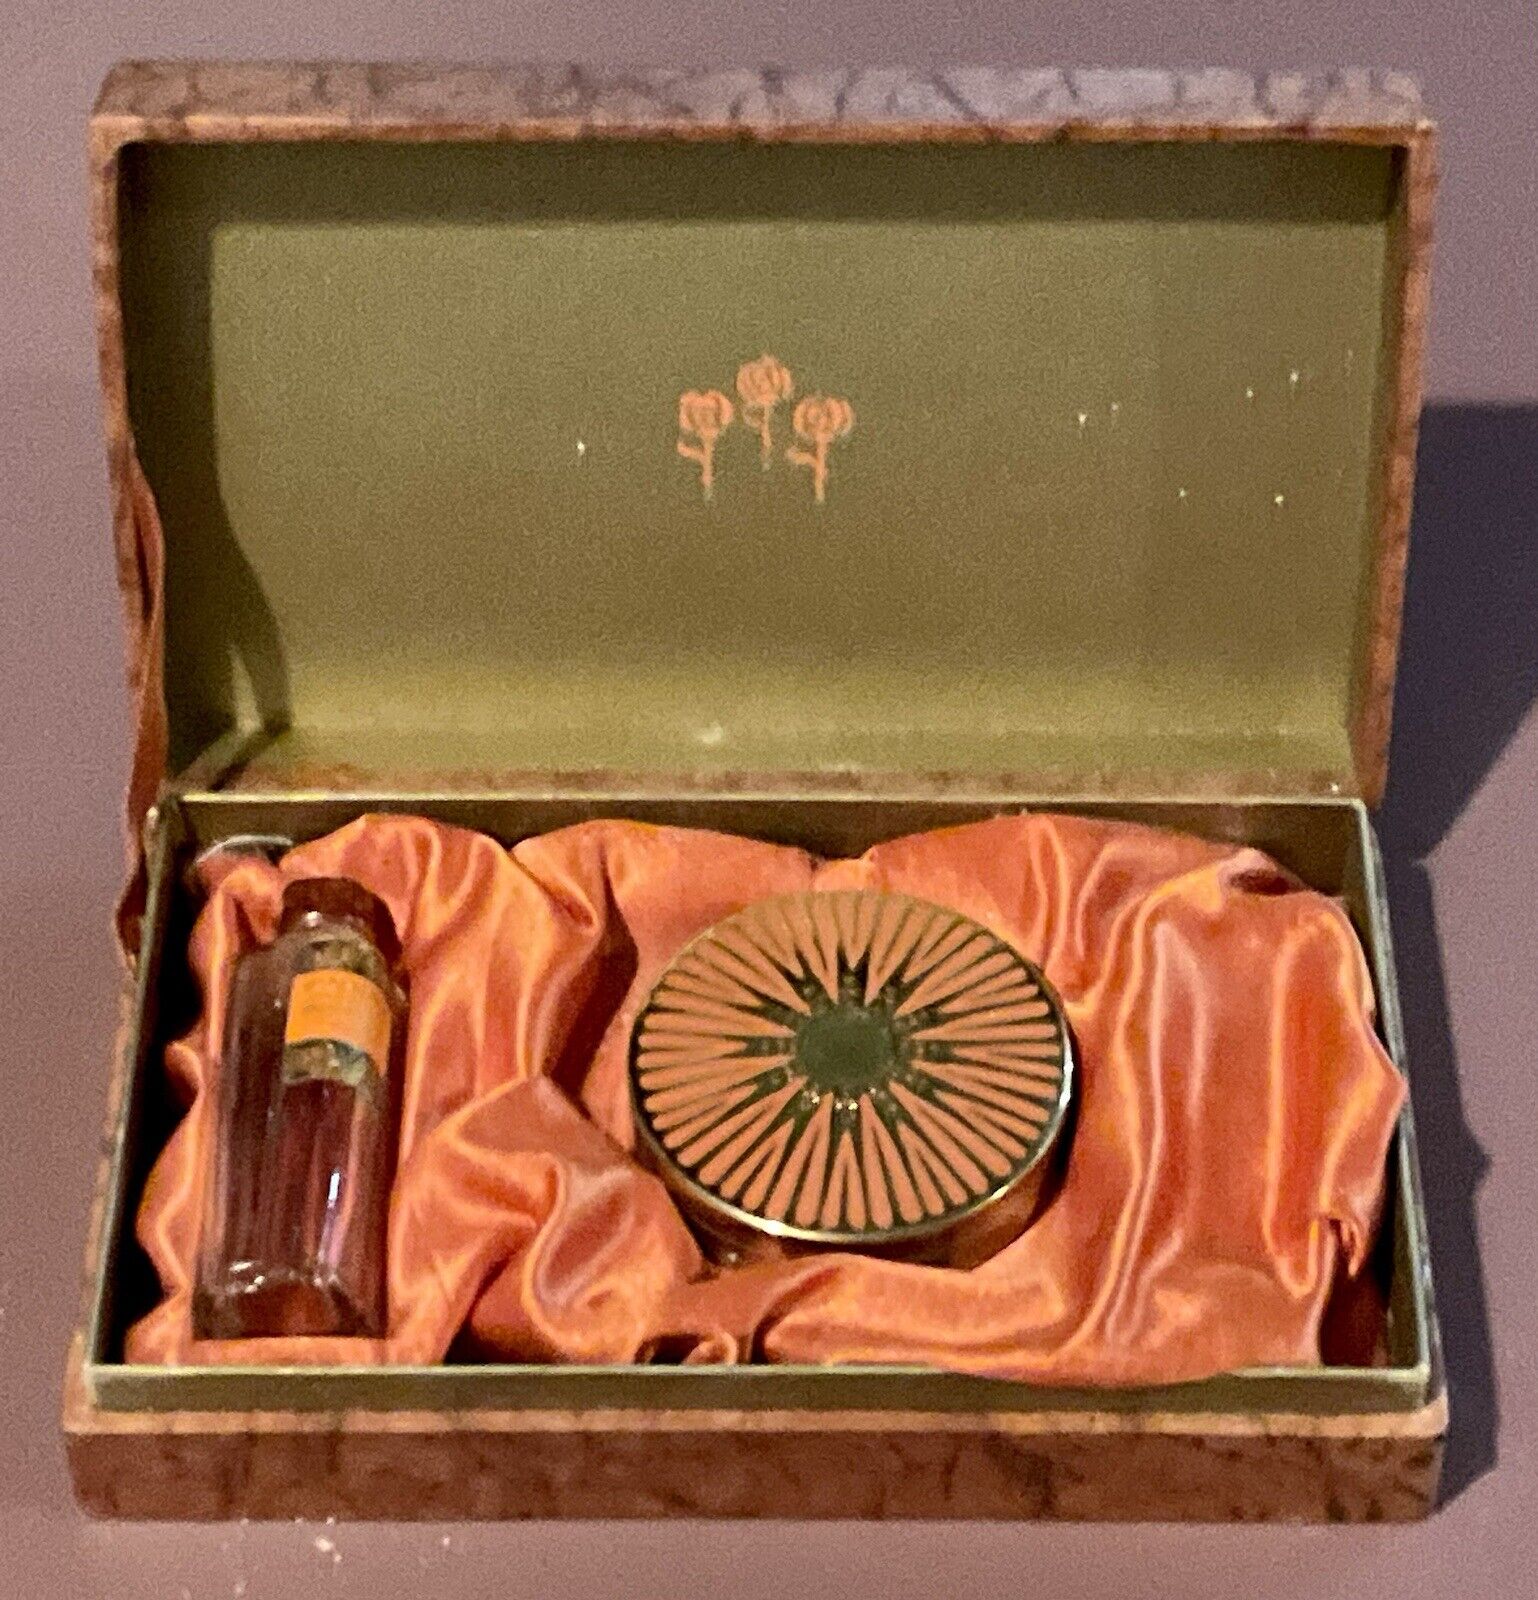 Wordsworth Fiancée Mini Perfume Bottle And Compact Original Box